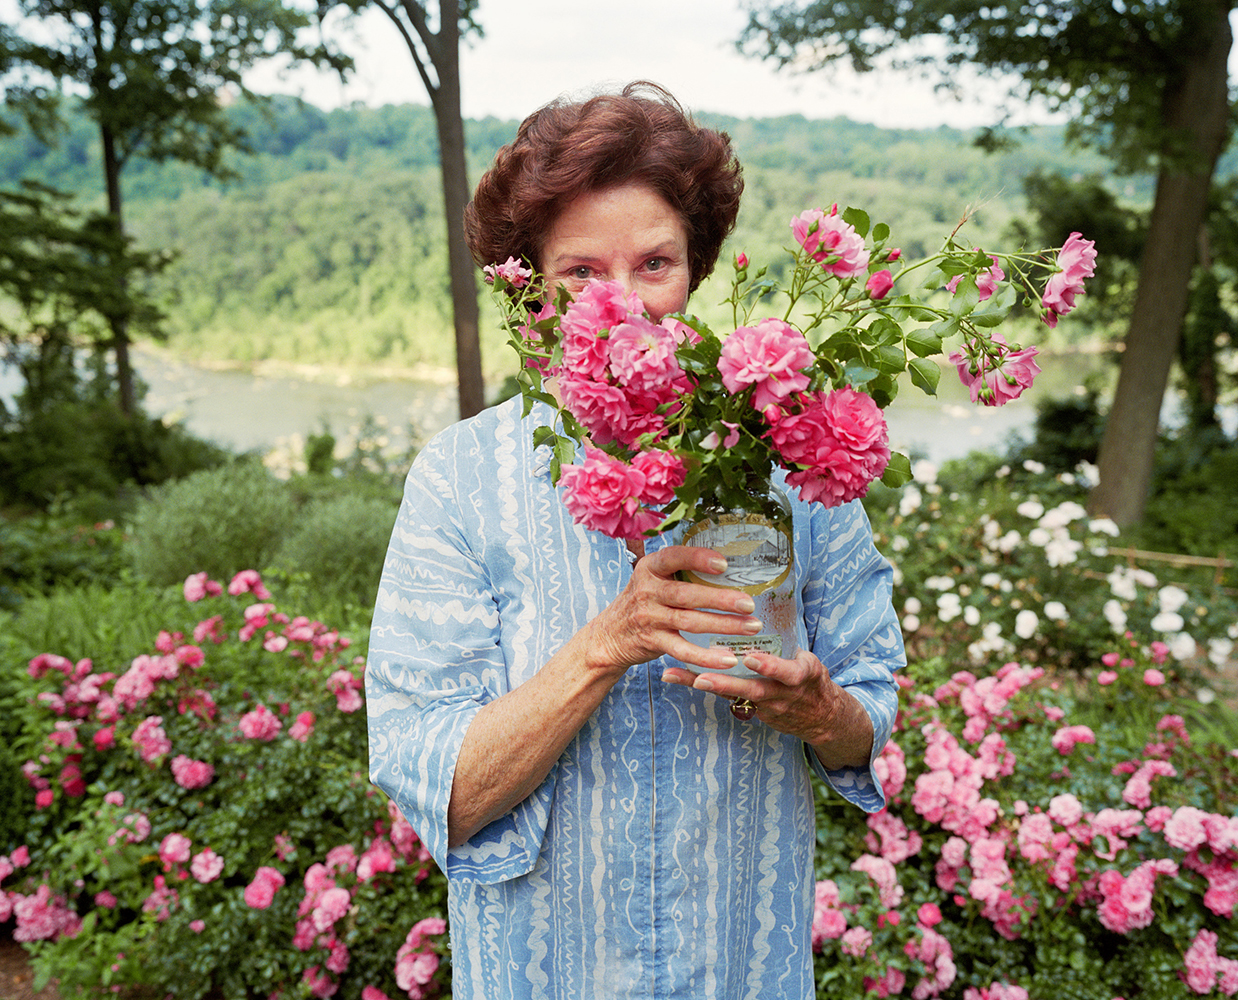  Sage Sohier,  Mum with Marie's roses, McLean, VA,  2005 